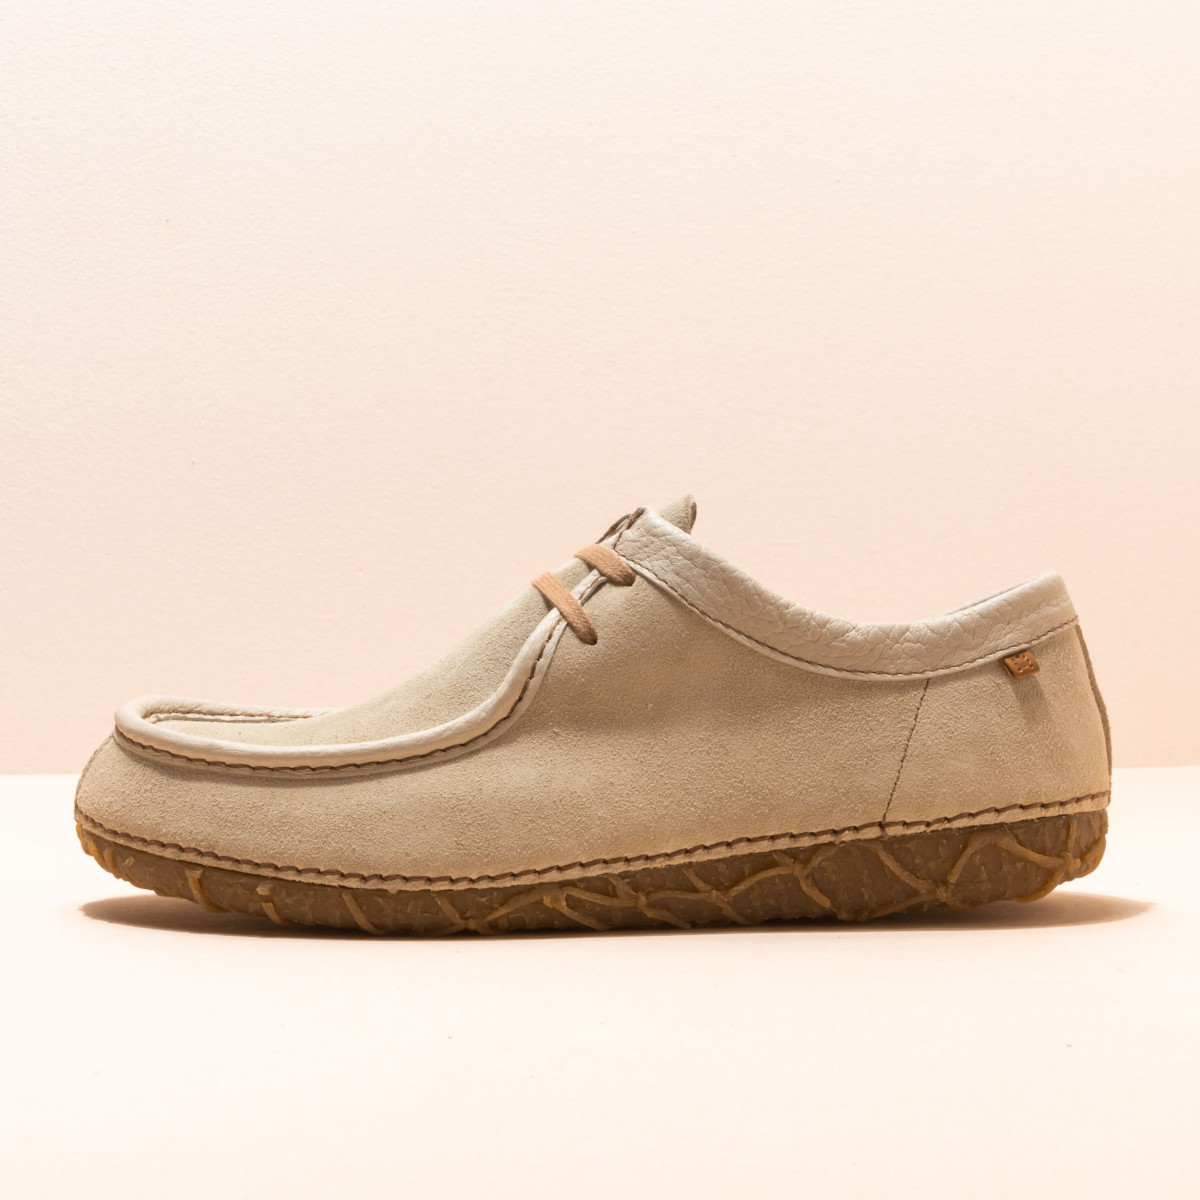 Chaussures confortables en daim - Beige - El naturalista